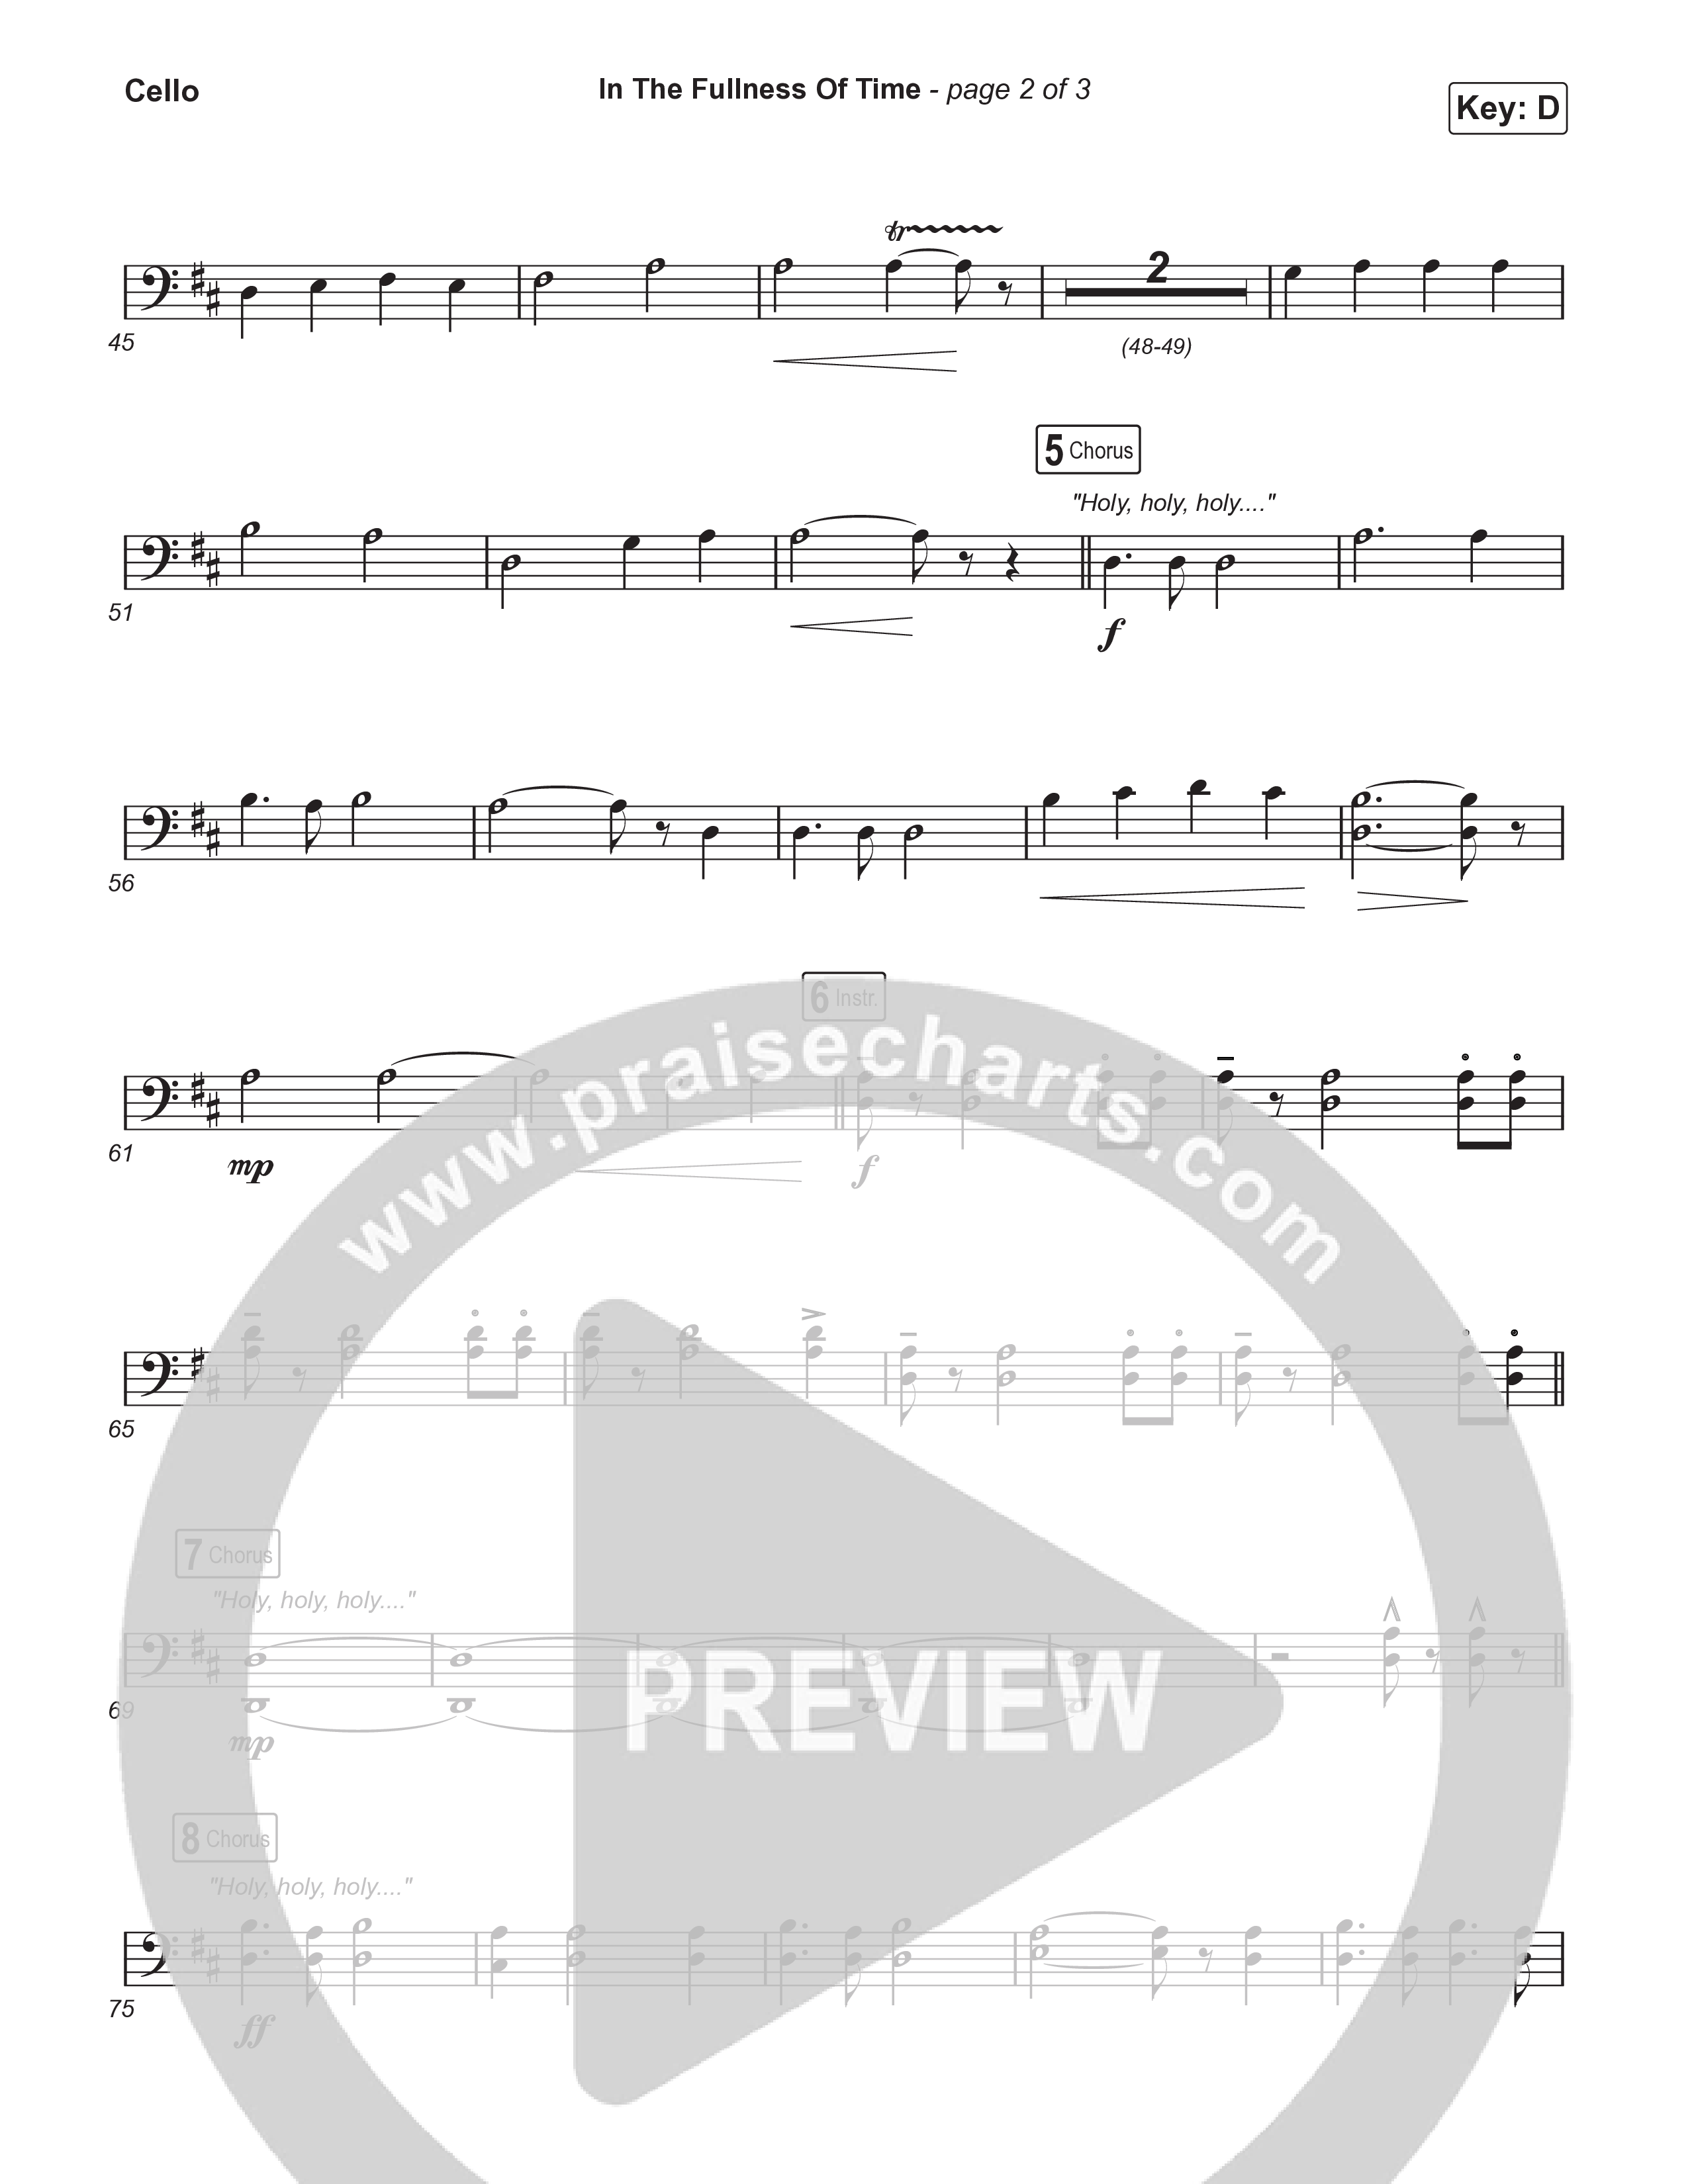 In The Fullness Of Time (Choral Anthem SATB) Cello (Matt Papa / Matt Boswell / Arr. Luke Gambill)